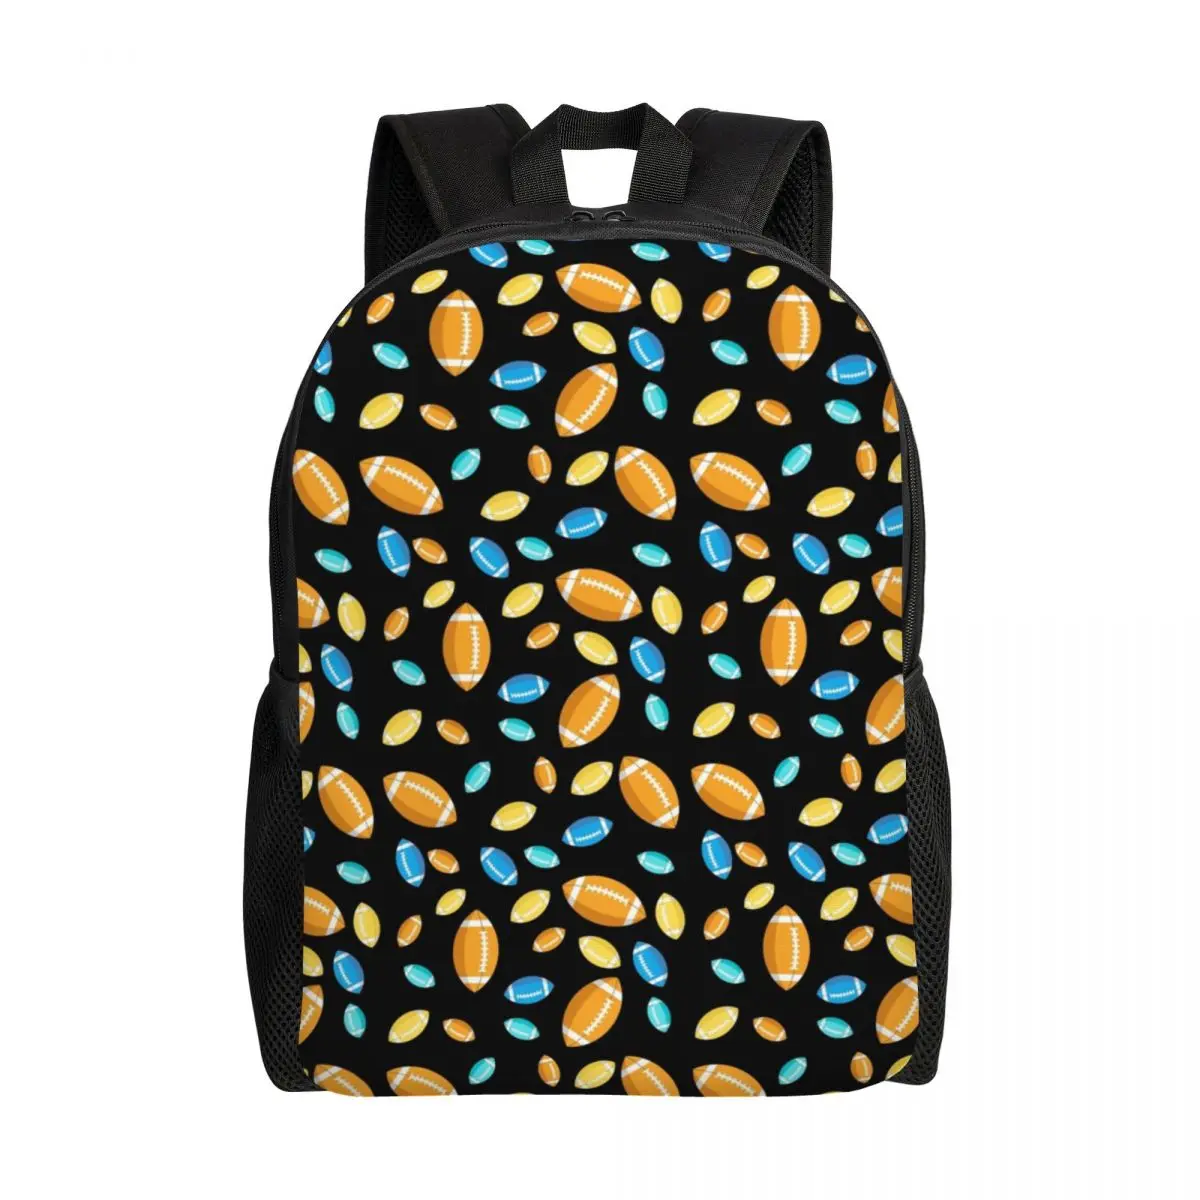 

American Rugby Ball 3D Print Backpacks for Boys Girls School College Travel Bags Men Women Bookbag Fits 15 Inch Laptop